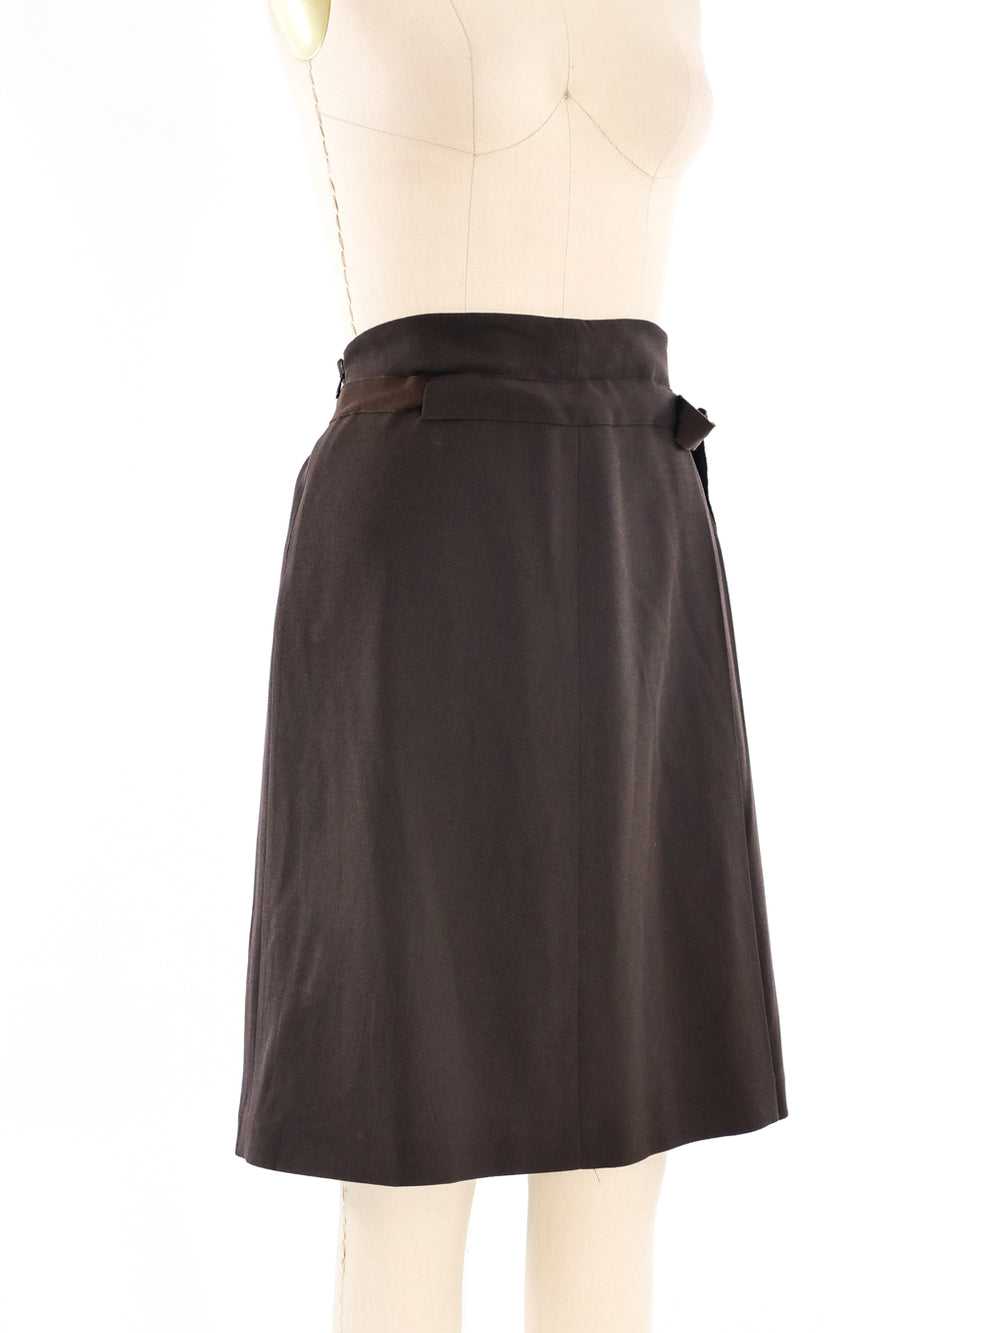 Salvatore Ferragamo Chocolate Wool Pleated Skirt - image 3